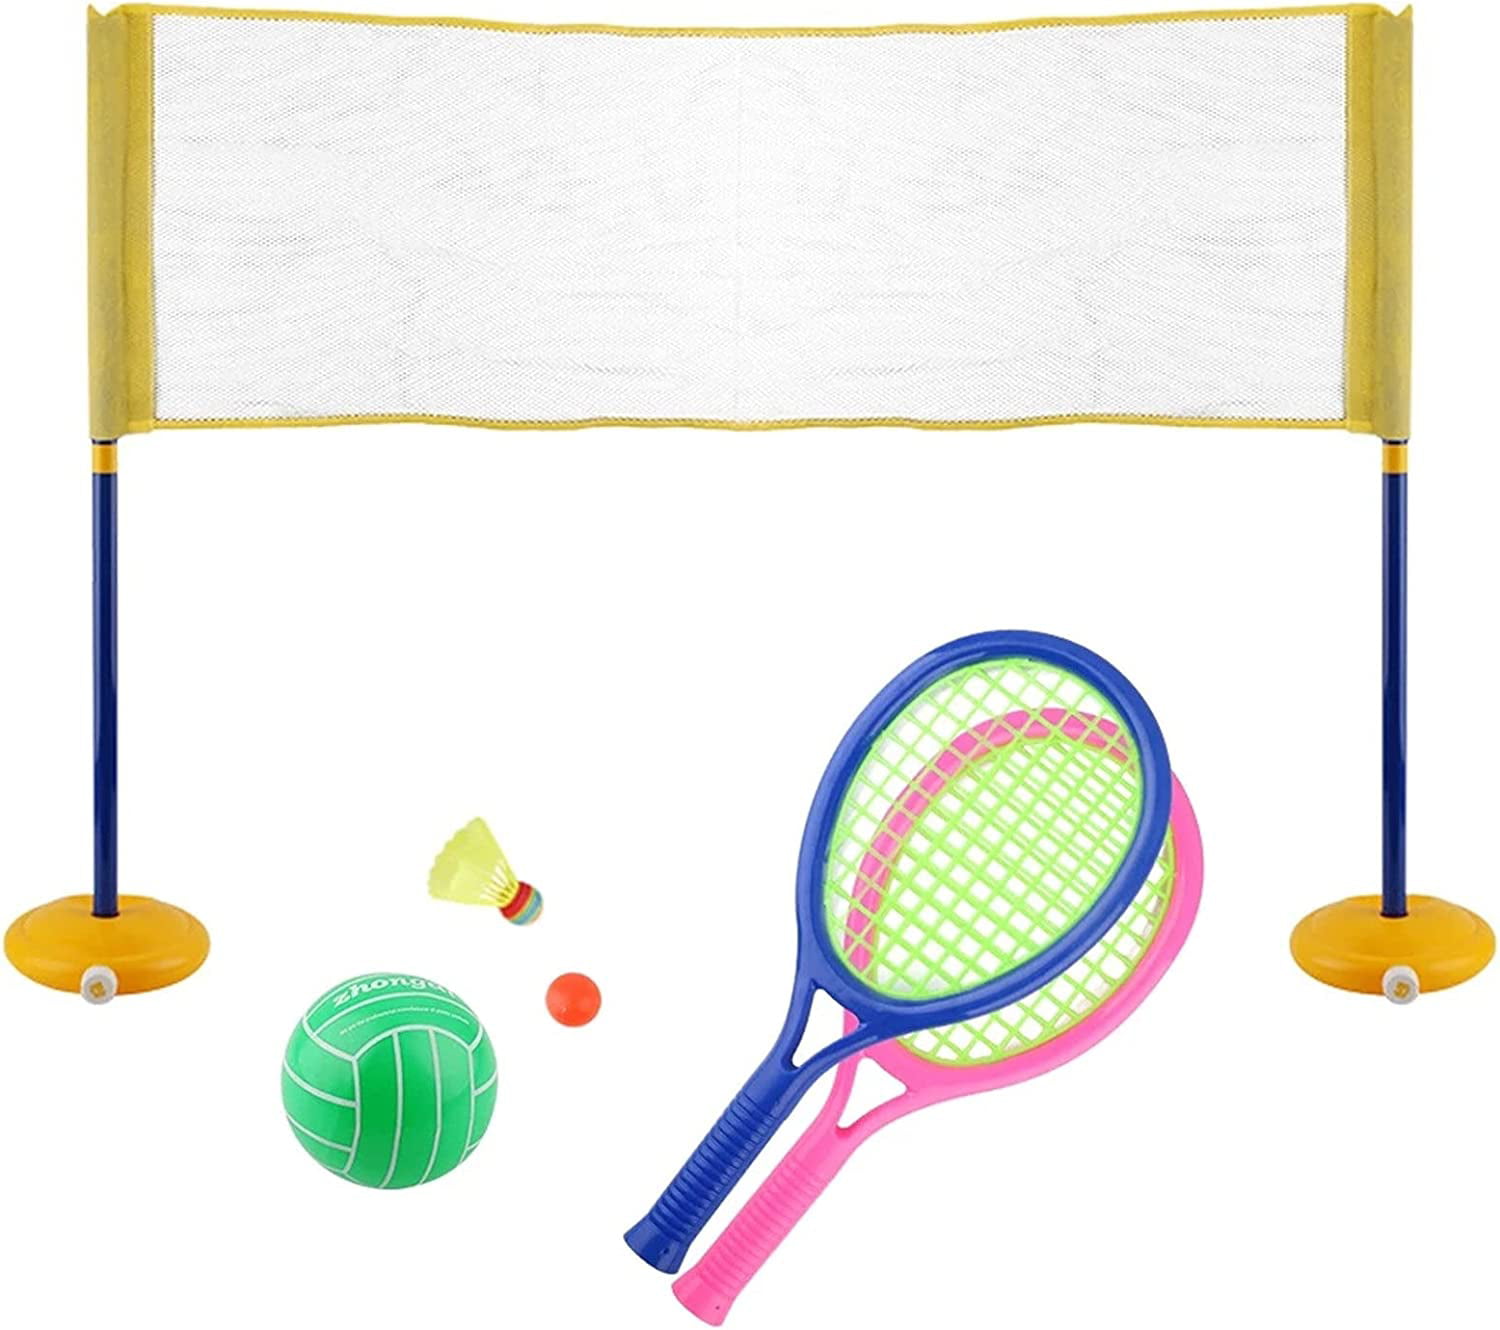 Details about   2 Packs Badminton Tennis Volleyball Net For Beach Garden Indoor Outdoor Games US 